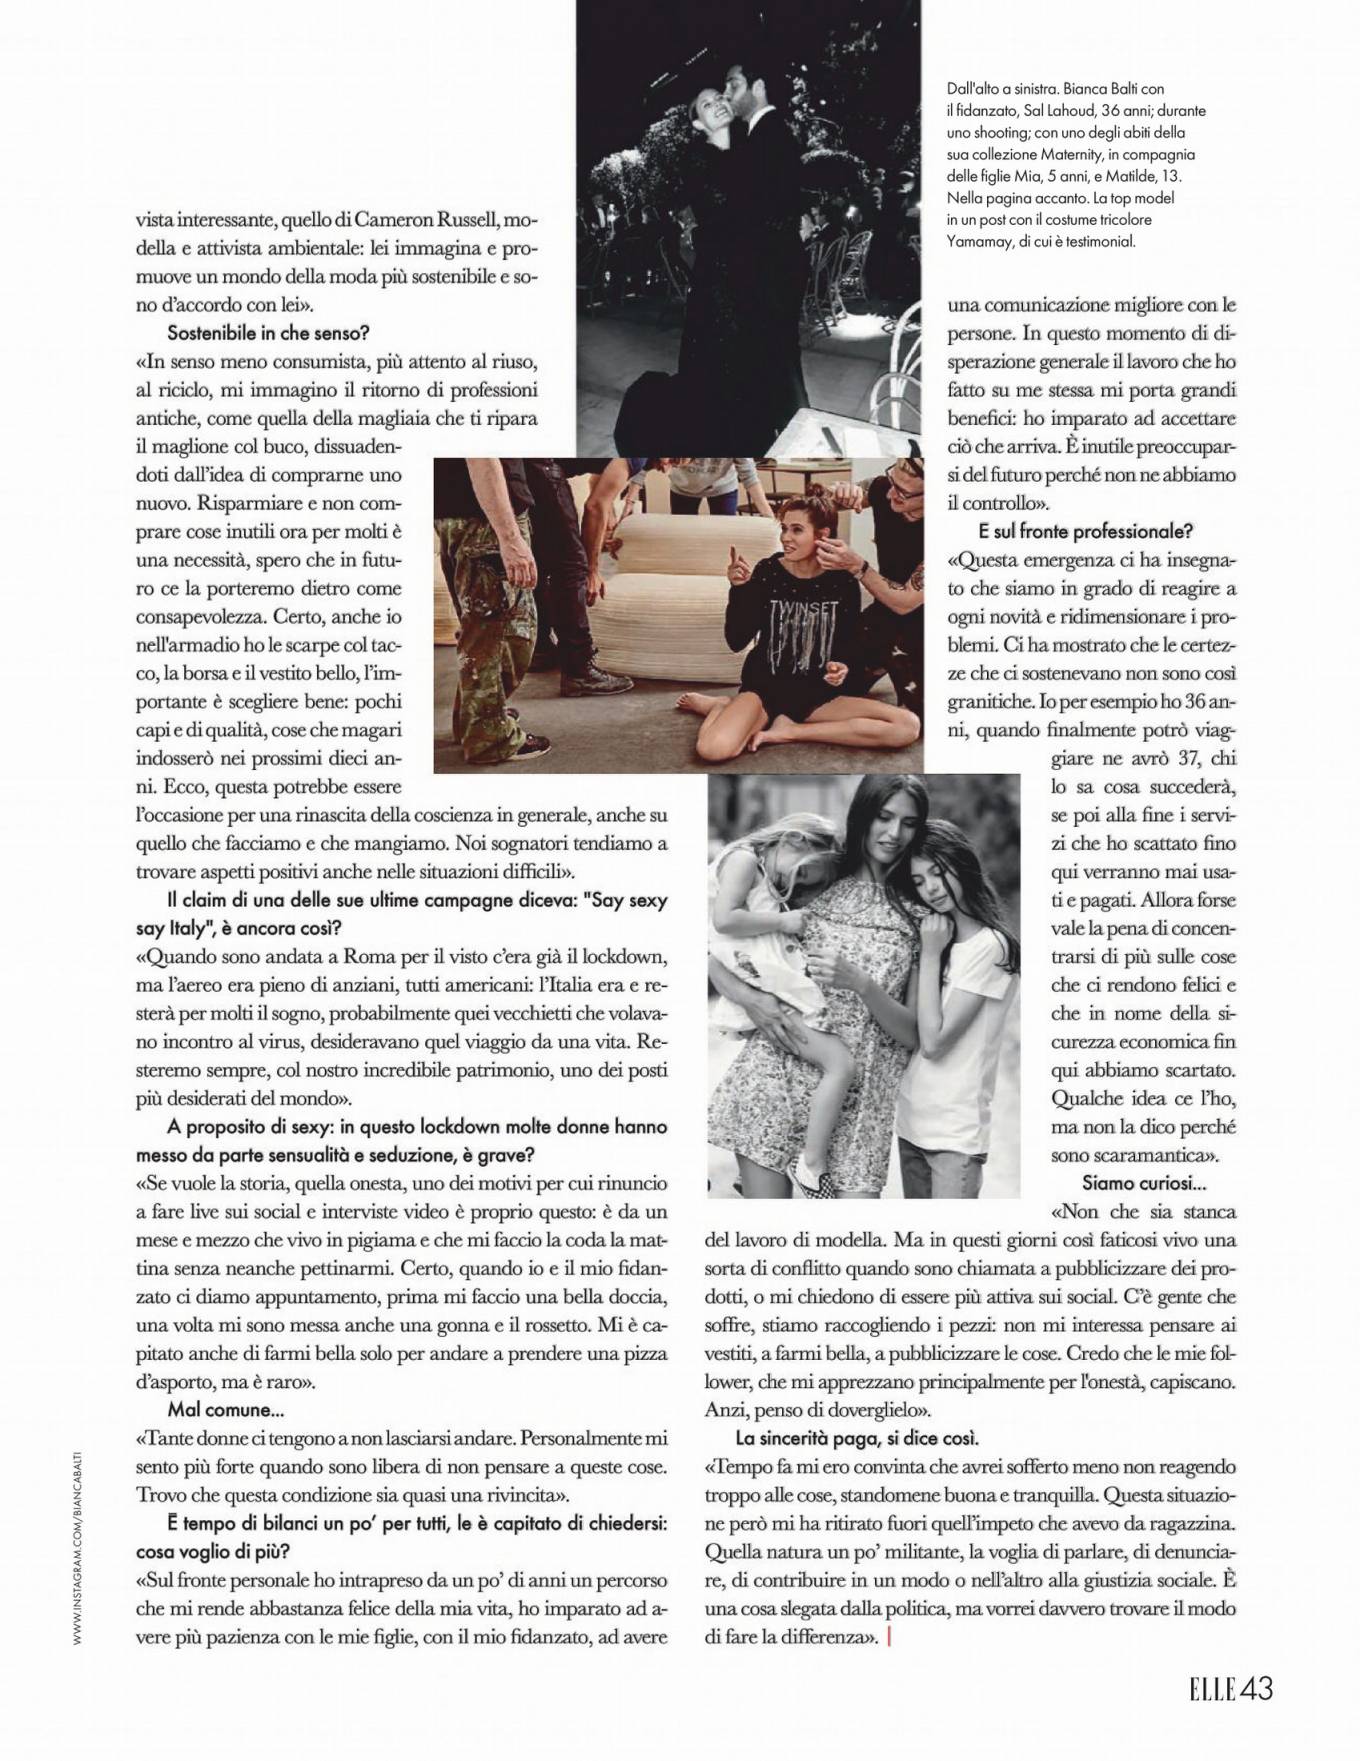 Bianca Balti â€“ Elle Italy Magazine (June 2020)